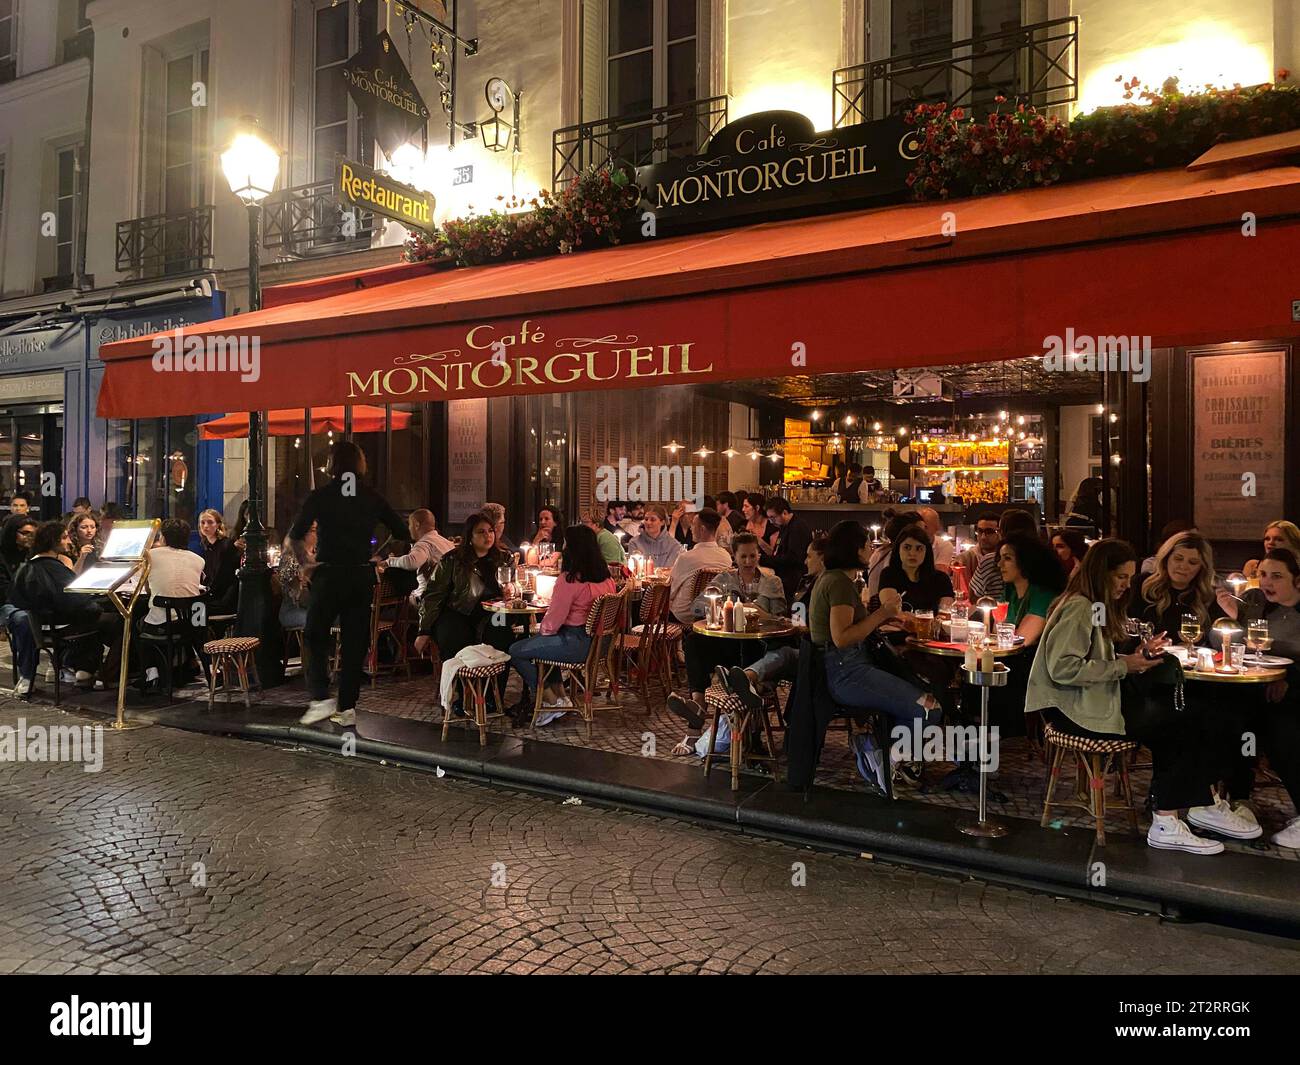 Persone sedute nell'area esterna, ristorante Cafe Montogrueil, sera, notte, Parigi, Francia Foto Stock